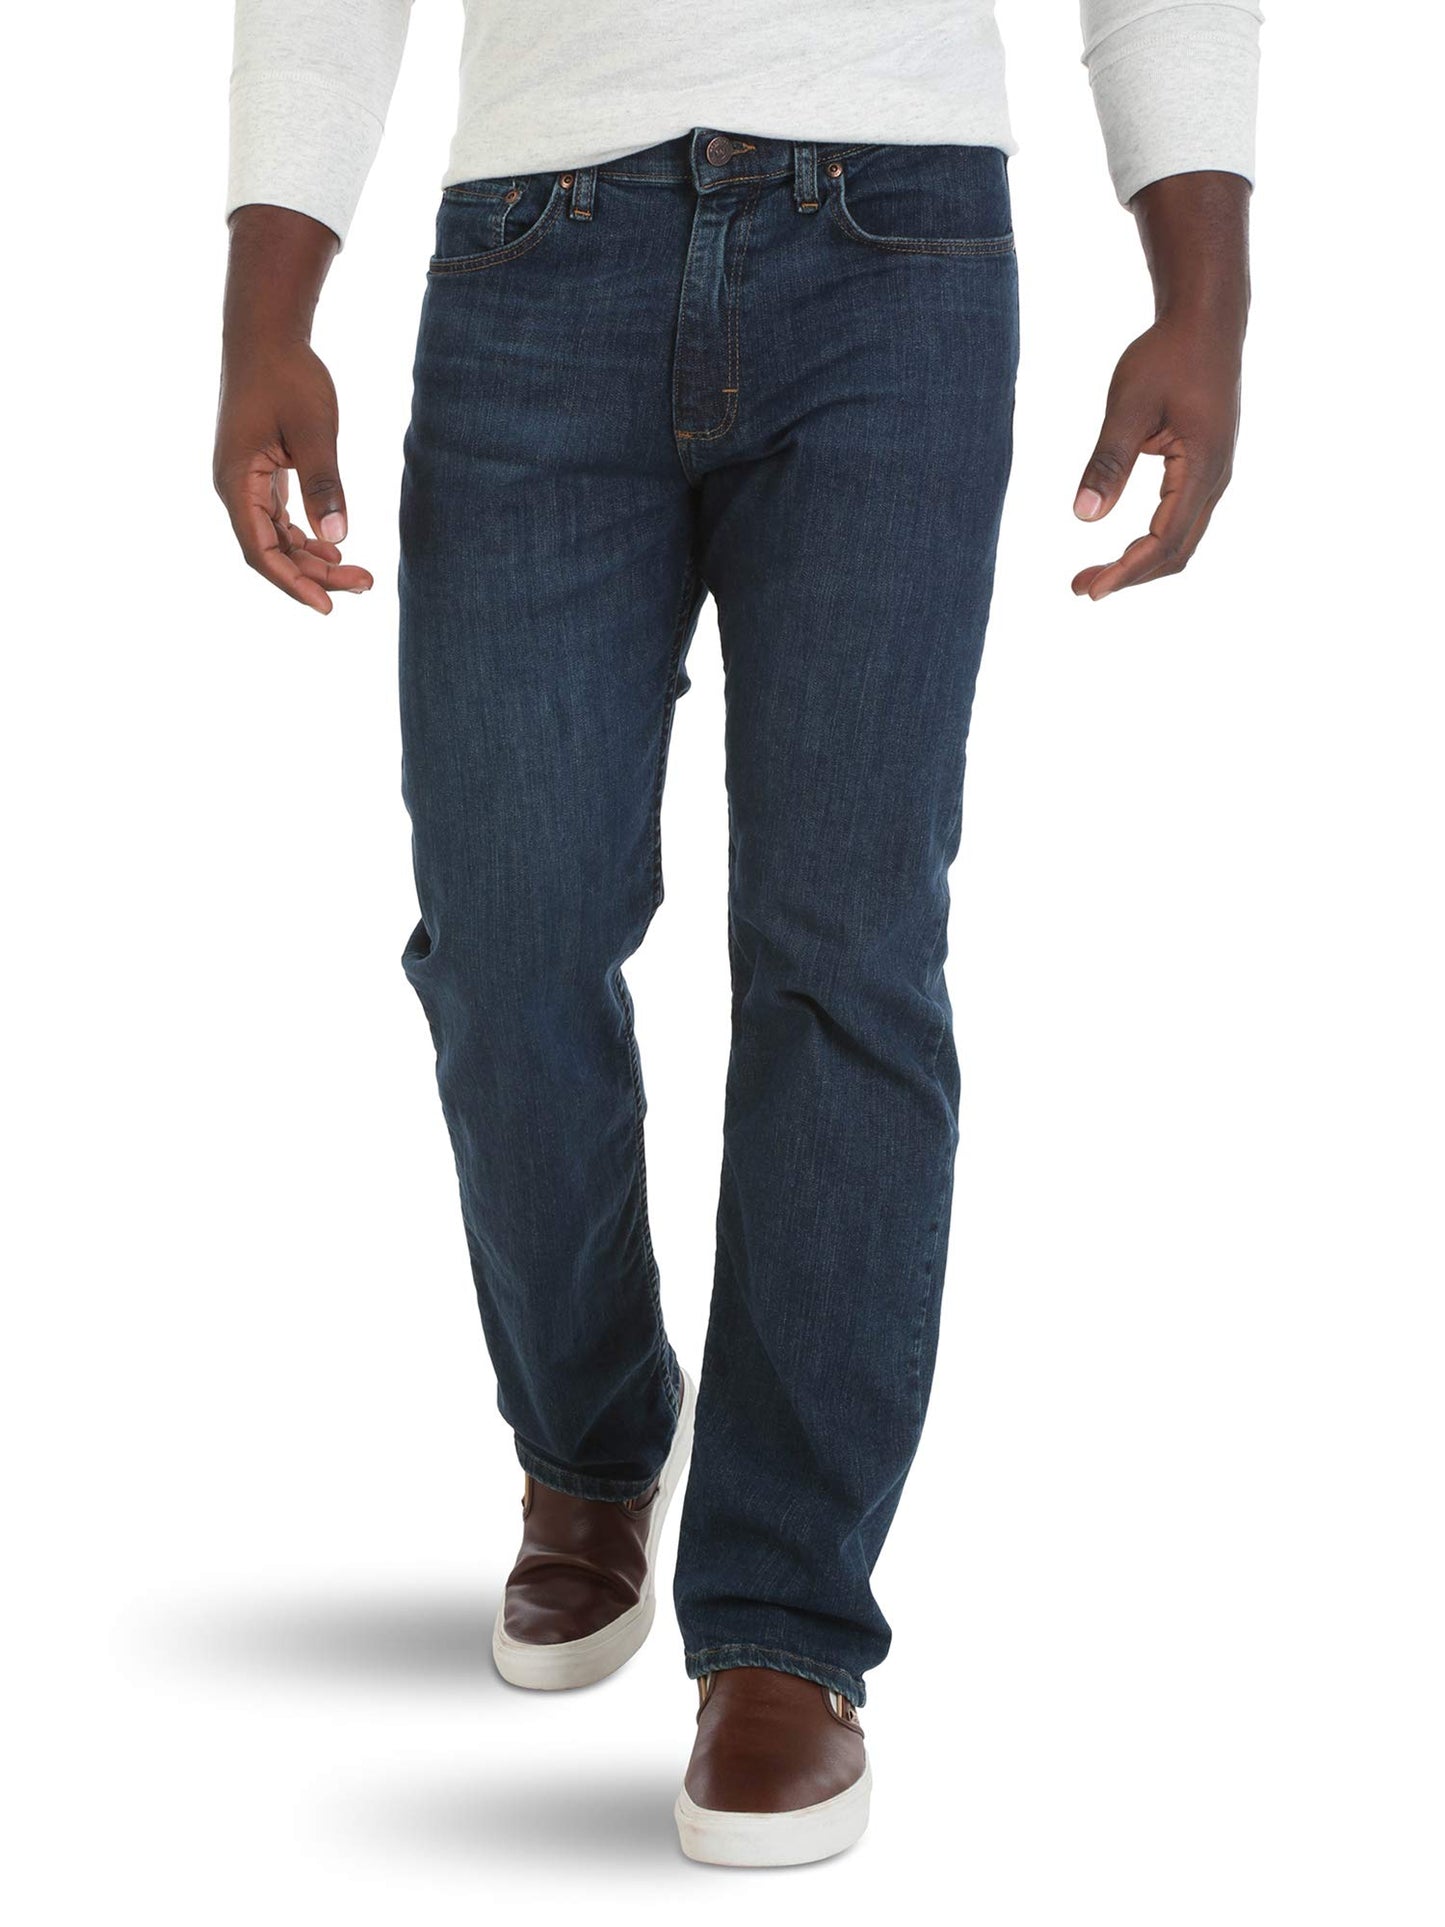 Wrangler Authentics Men's Big & Tall Comfort Flex Waist Relaxed Fit Jean, Carbon, 44W x 34L